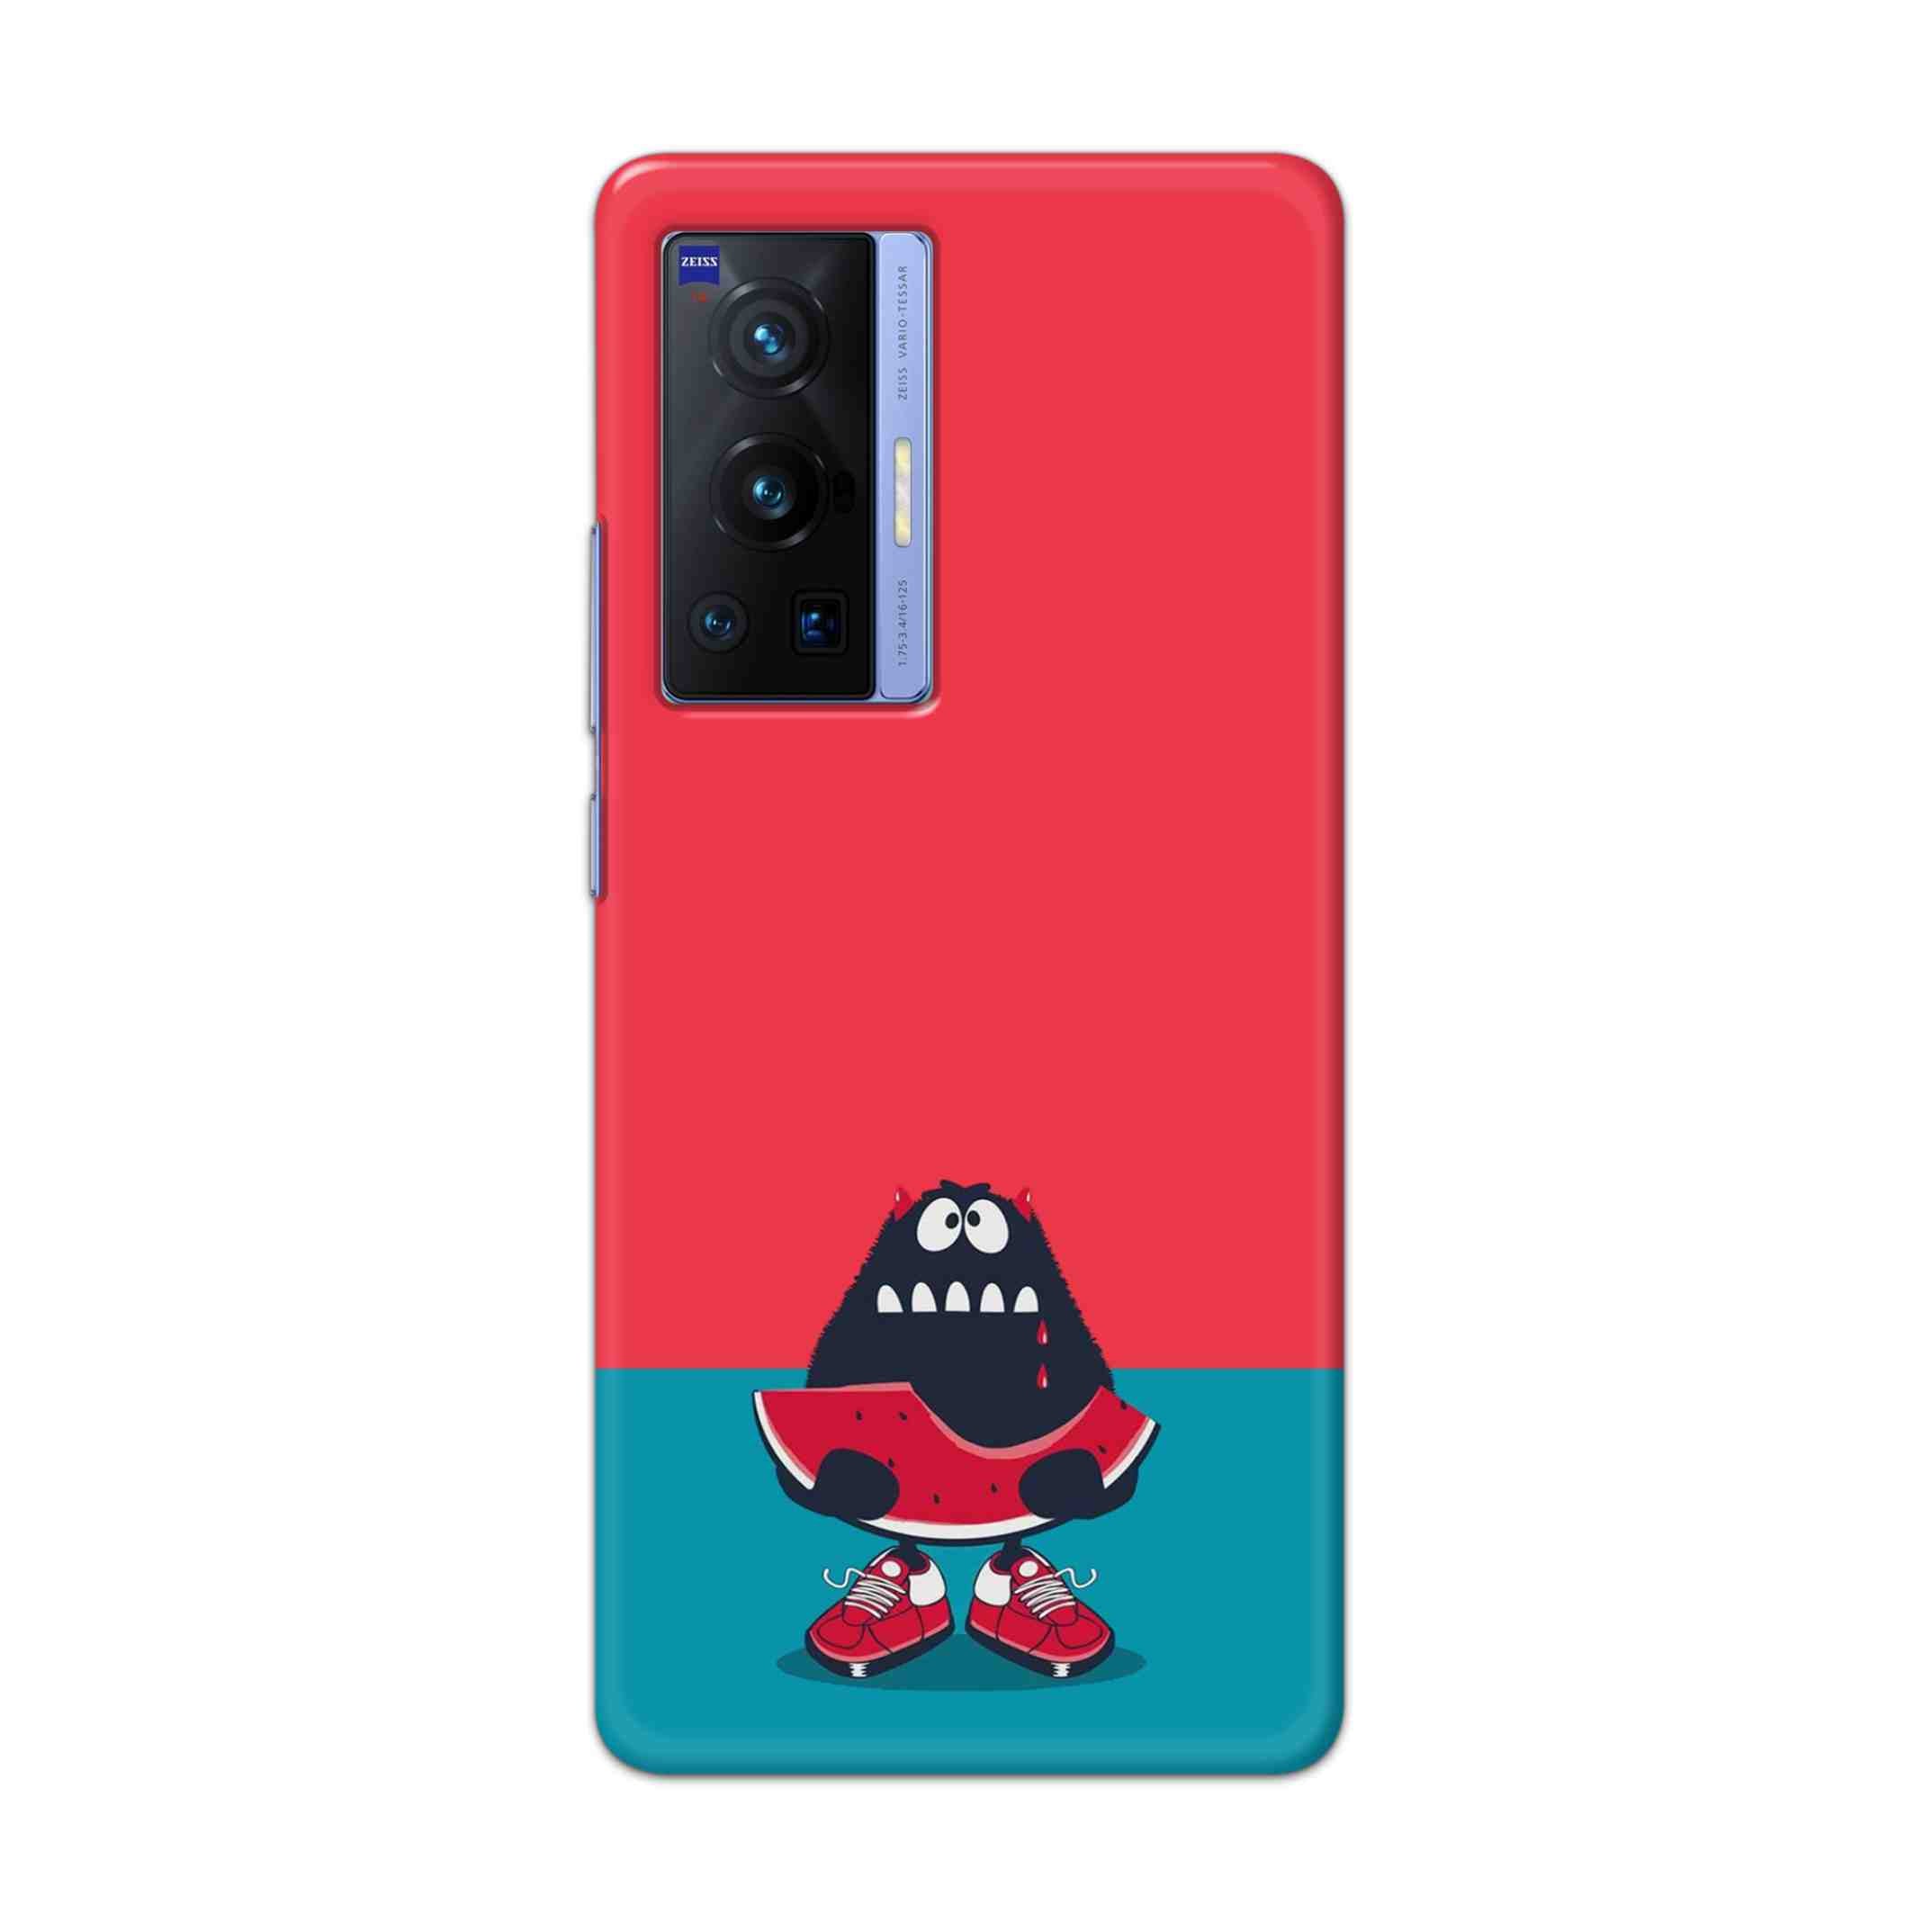 Buy Watermelon Hard Back Mobile Phone Case Cover For Vivo X70 Pro Online